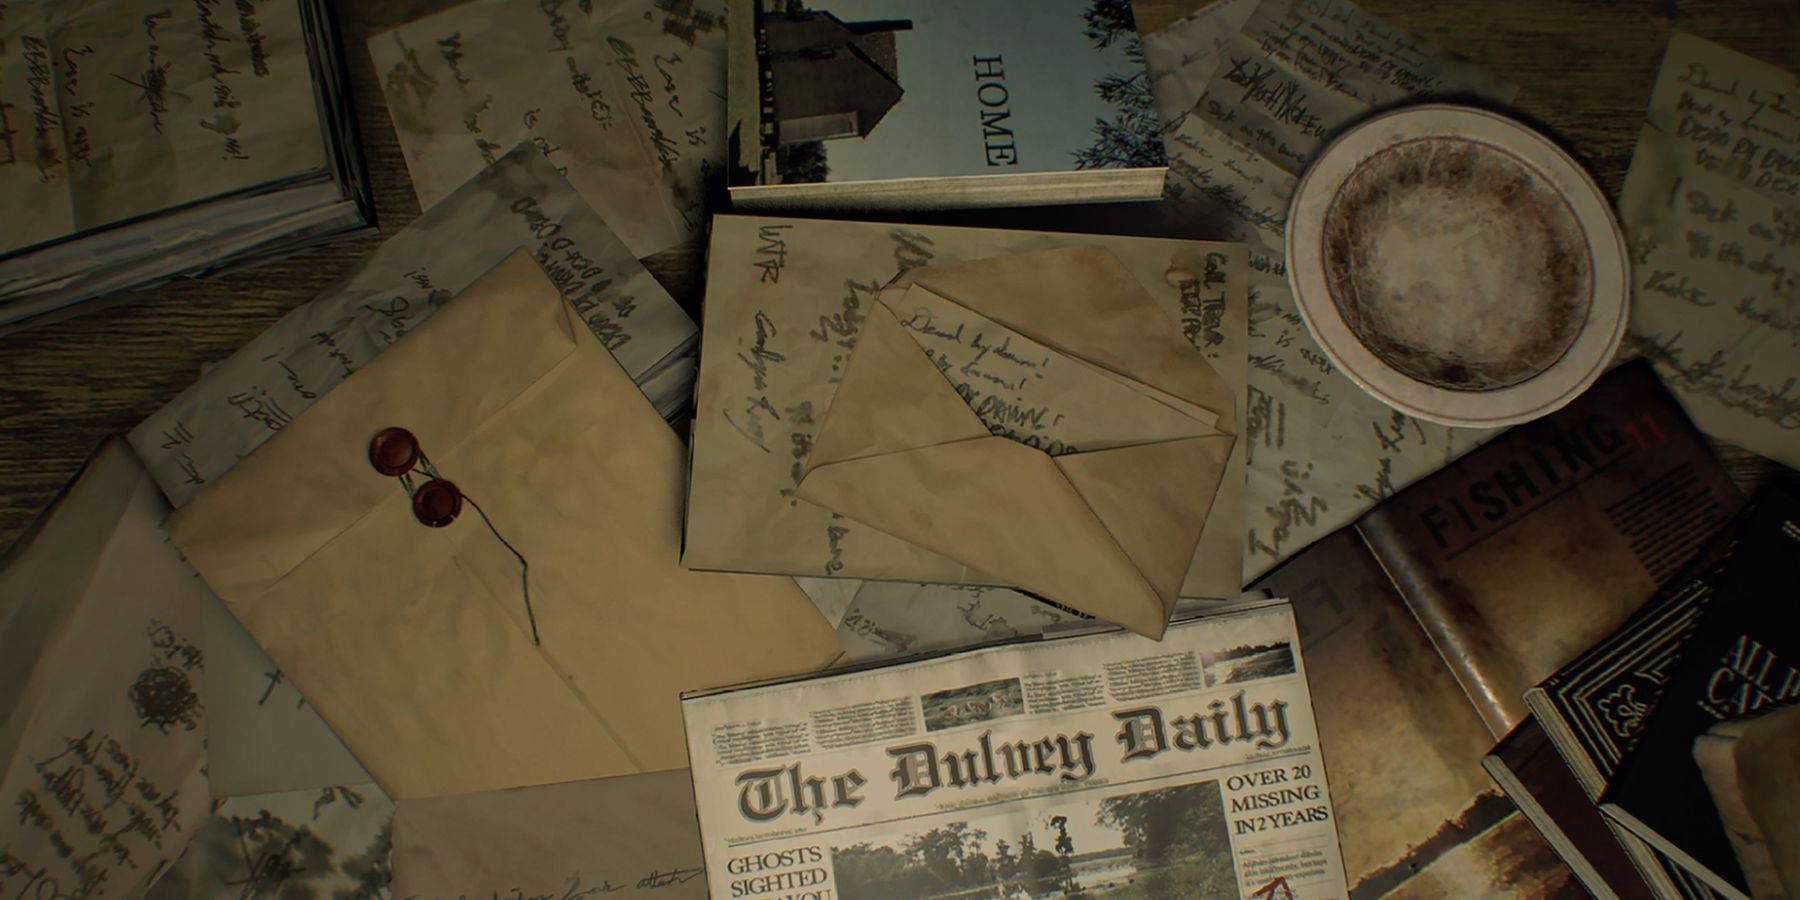 resident evil 7 newspapers etc on desk